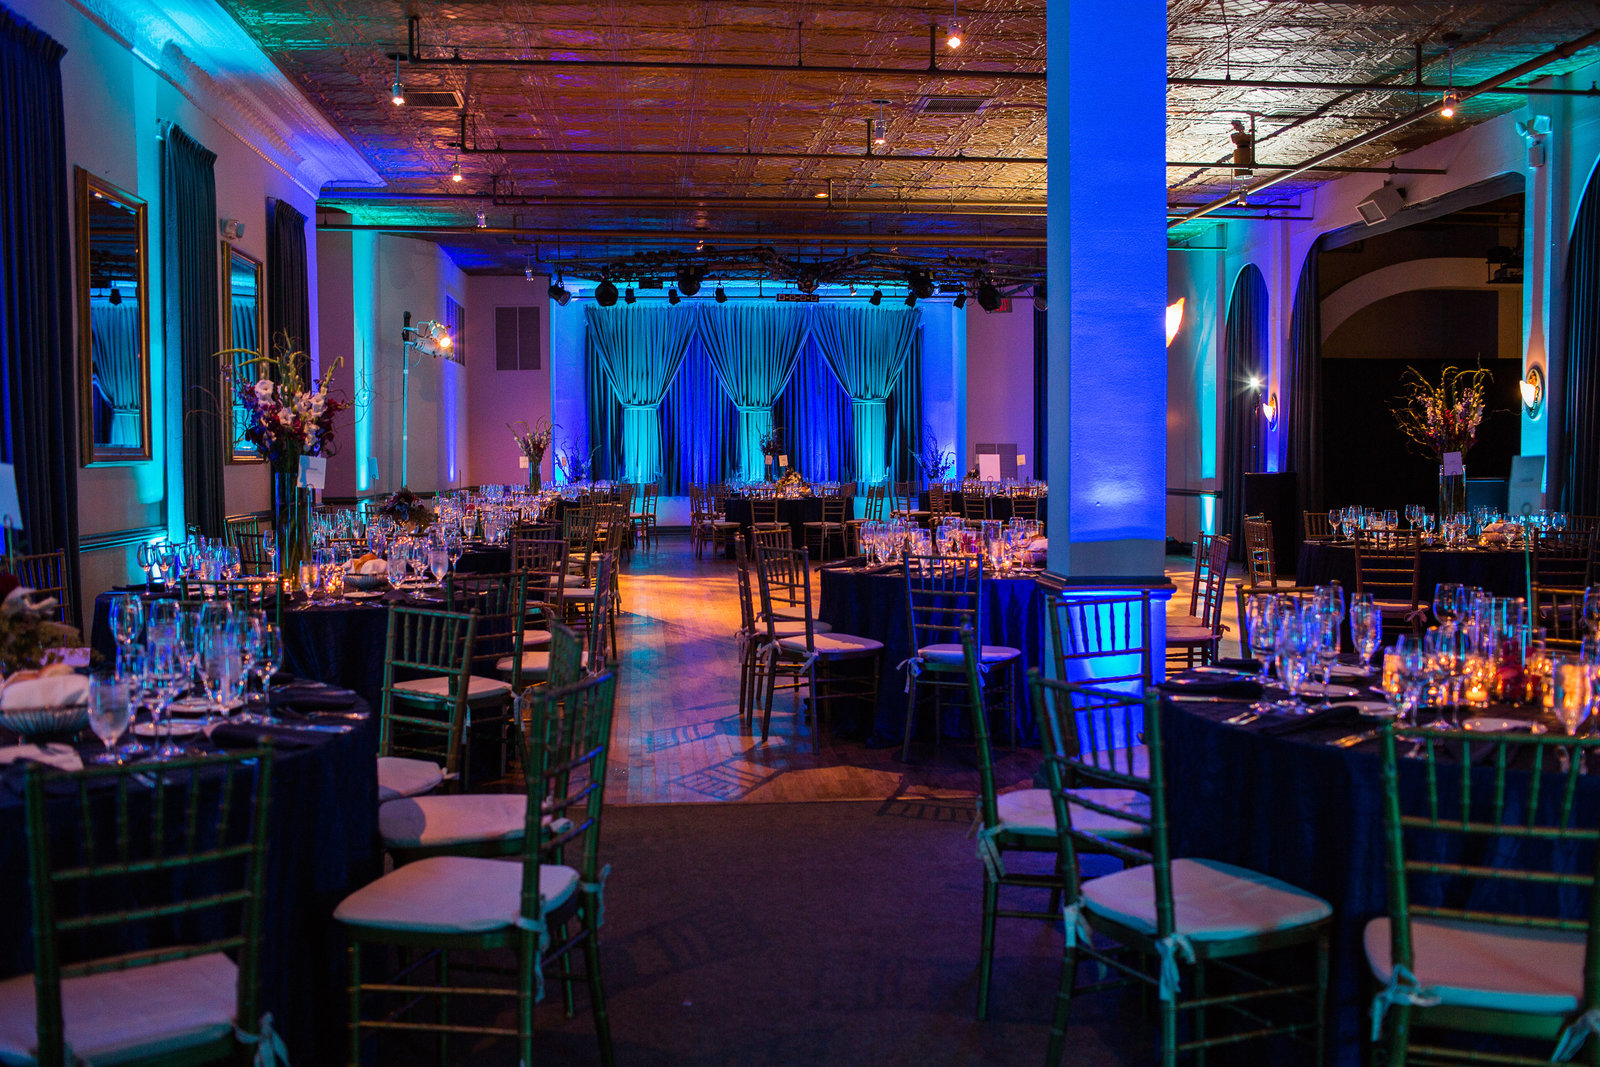 Clarendon Ballroom Wedding Reception with lighting